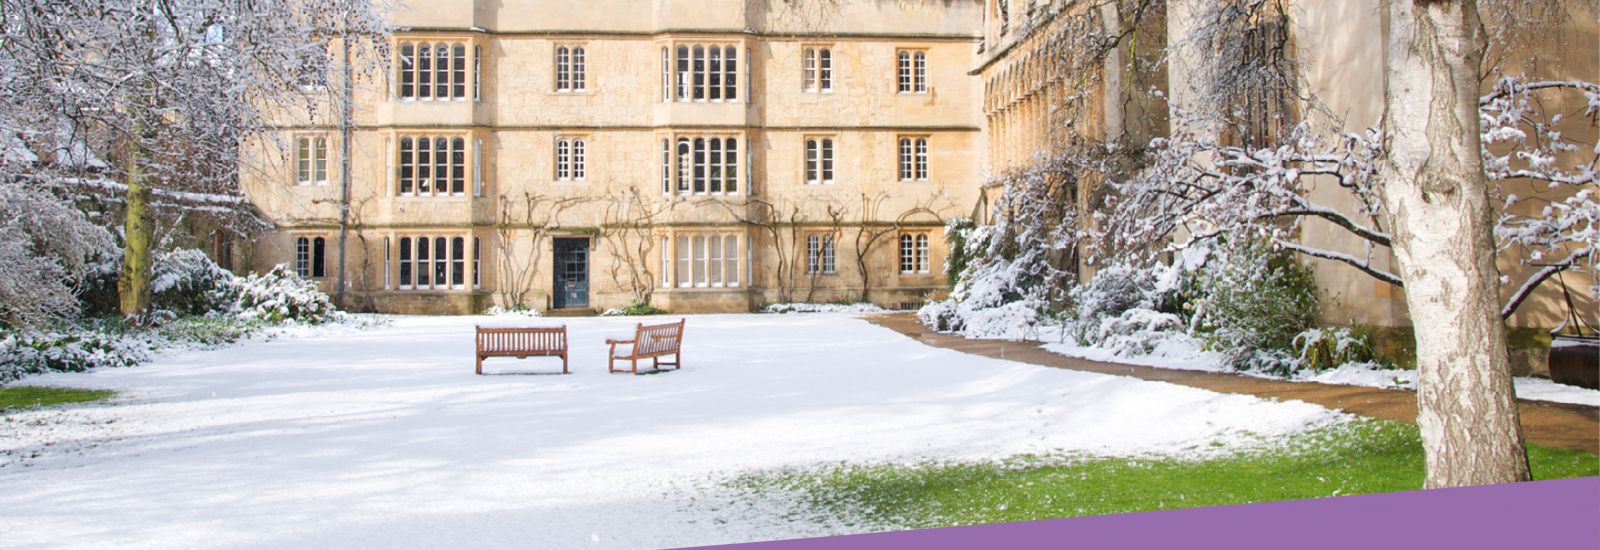 Exeter College quad in the snow